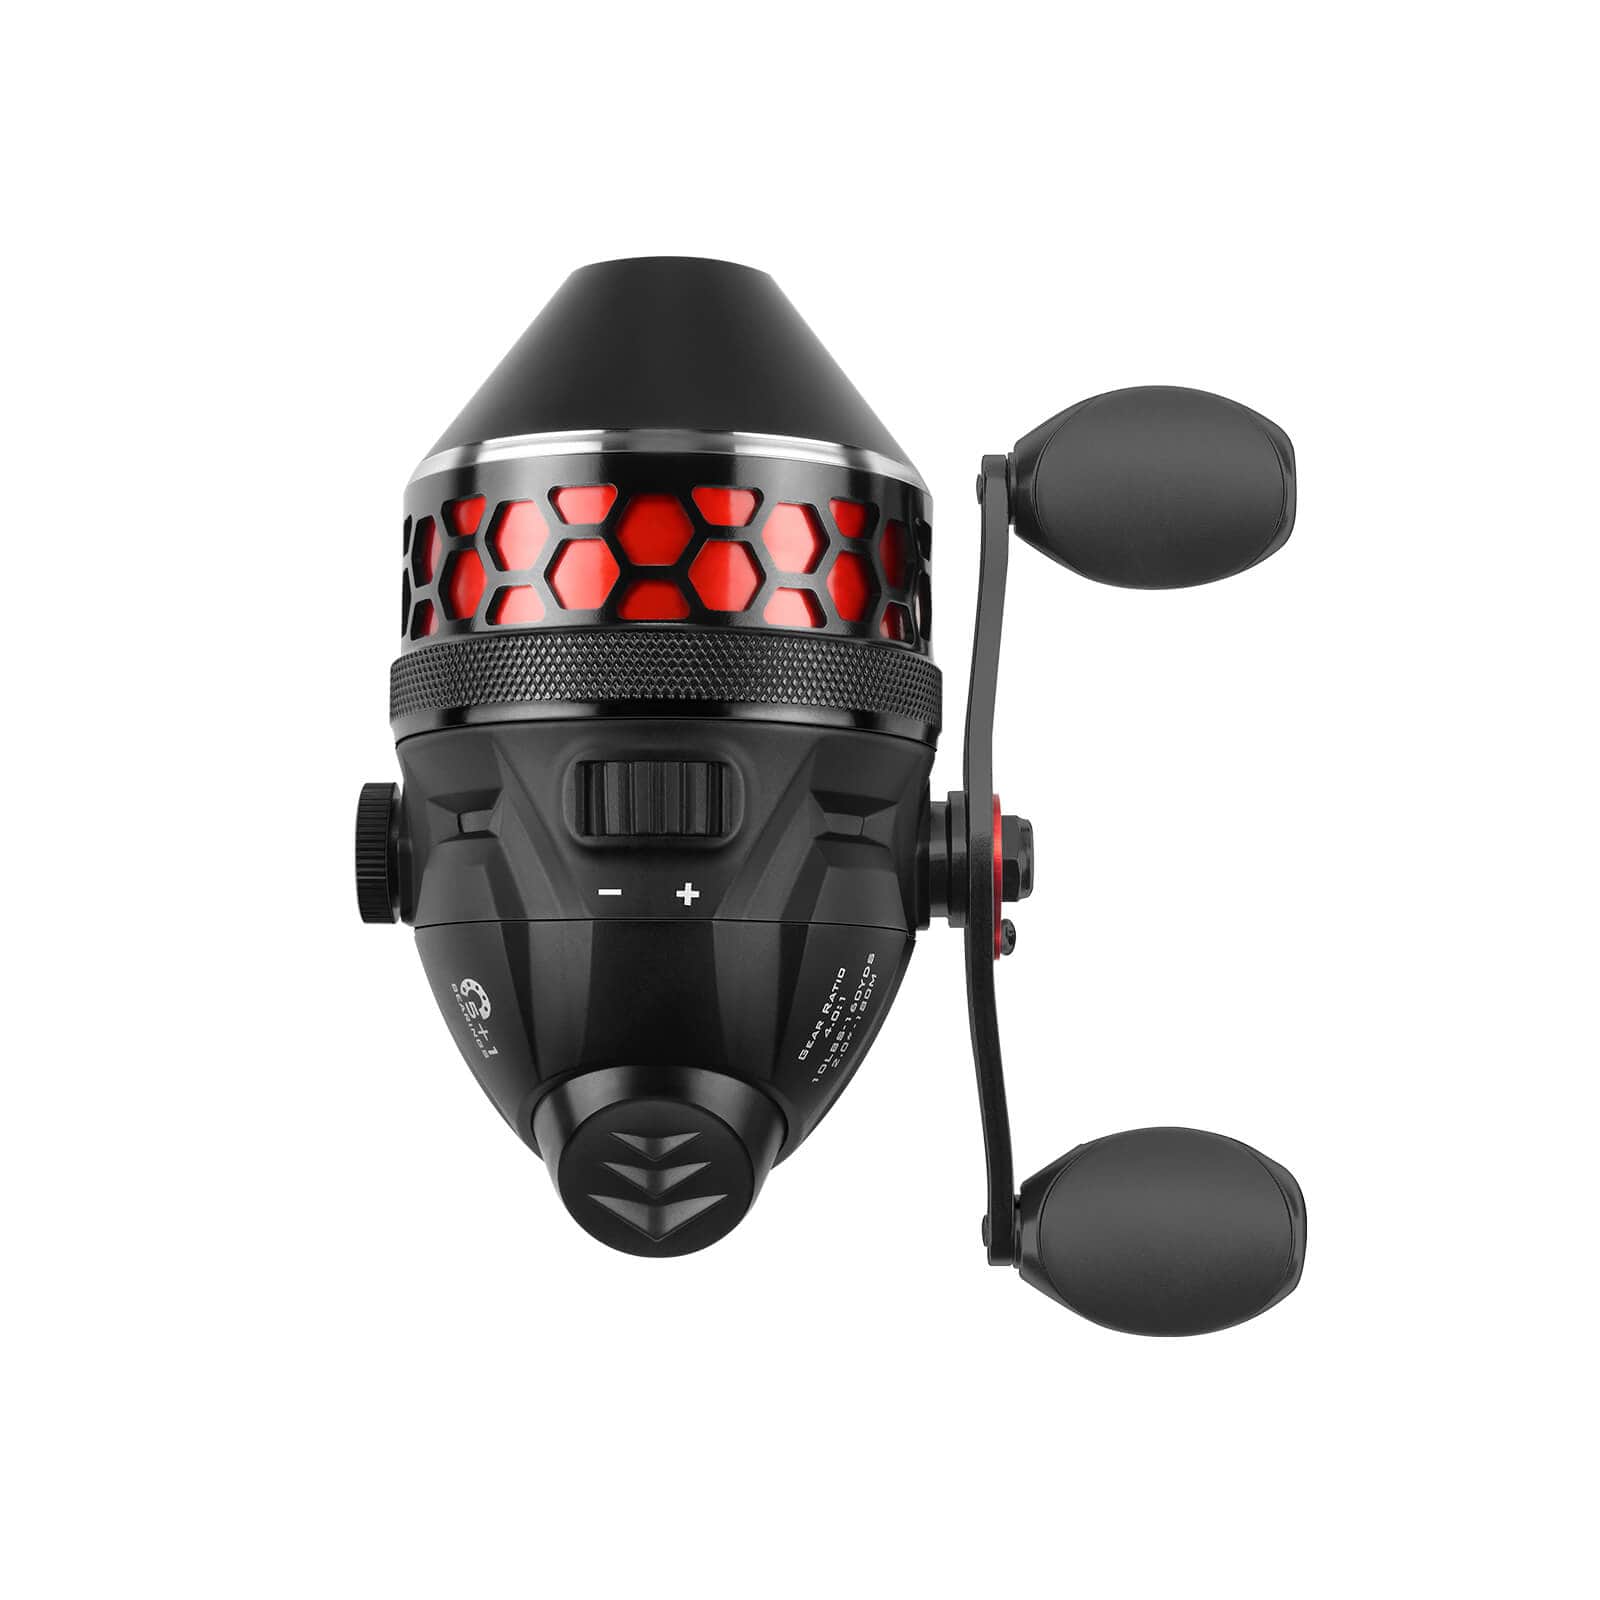 KastKing Brutus Spincast Fishing Reel 4.0:1 Gear Ratio 5 MaxiDur Ball  Bearings Includes fishing Line